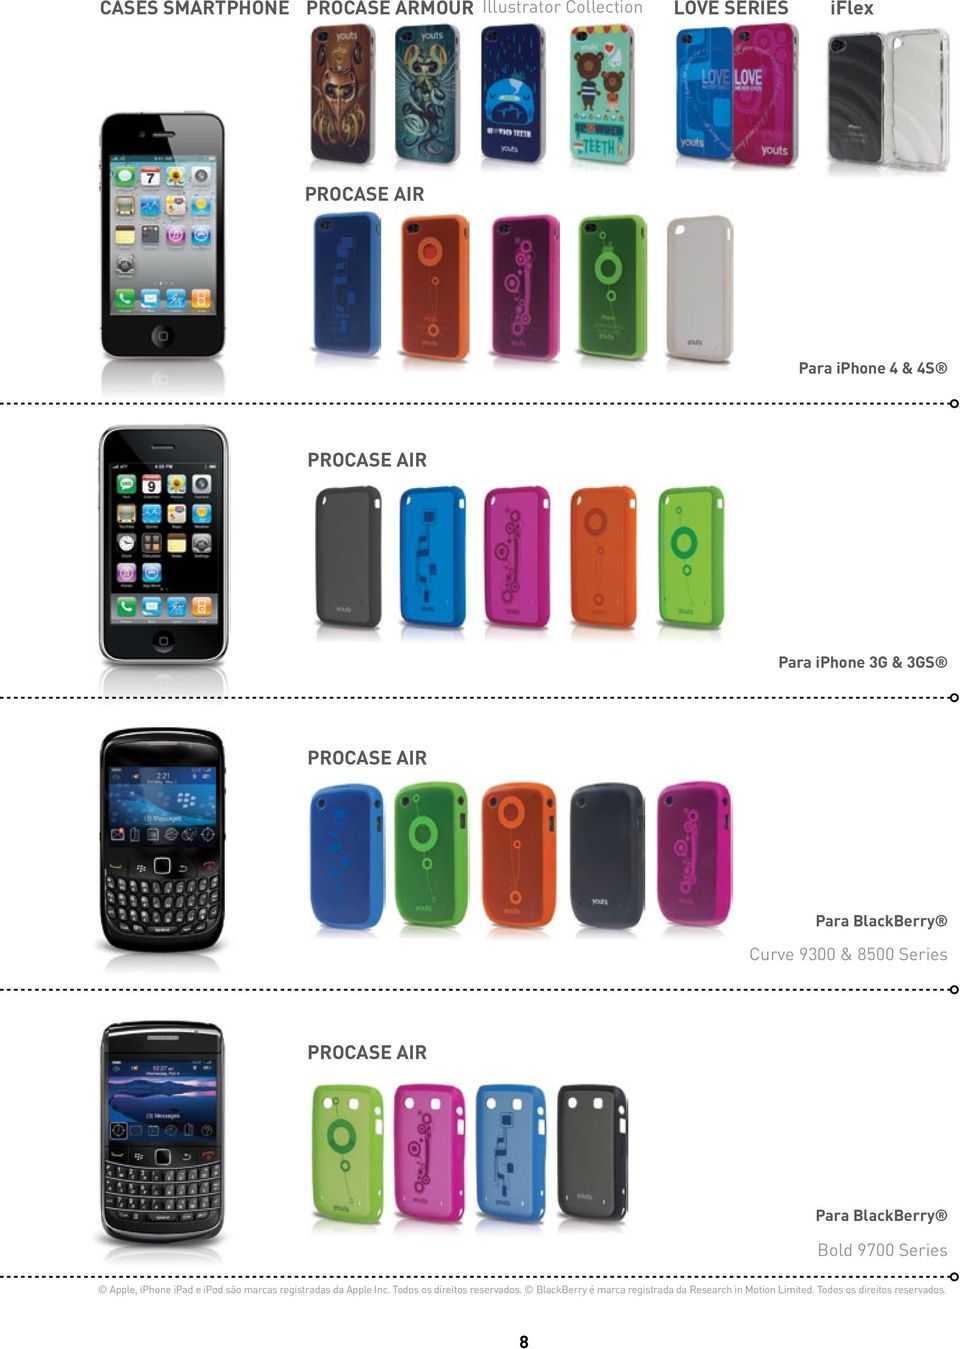 BlackBerry Bold 9700 Series Apple, iphone ipad e ipod são marcas registradas da Apple Inc.